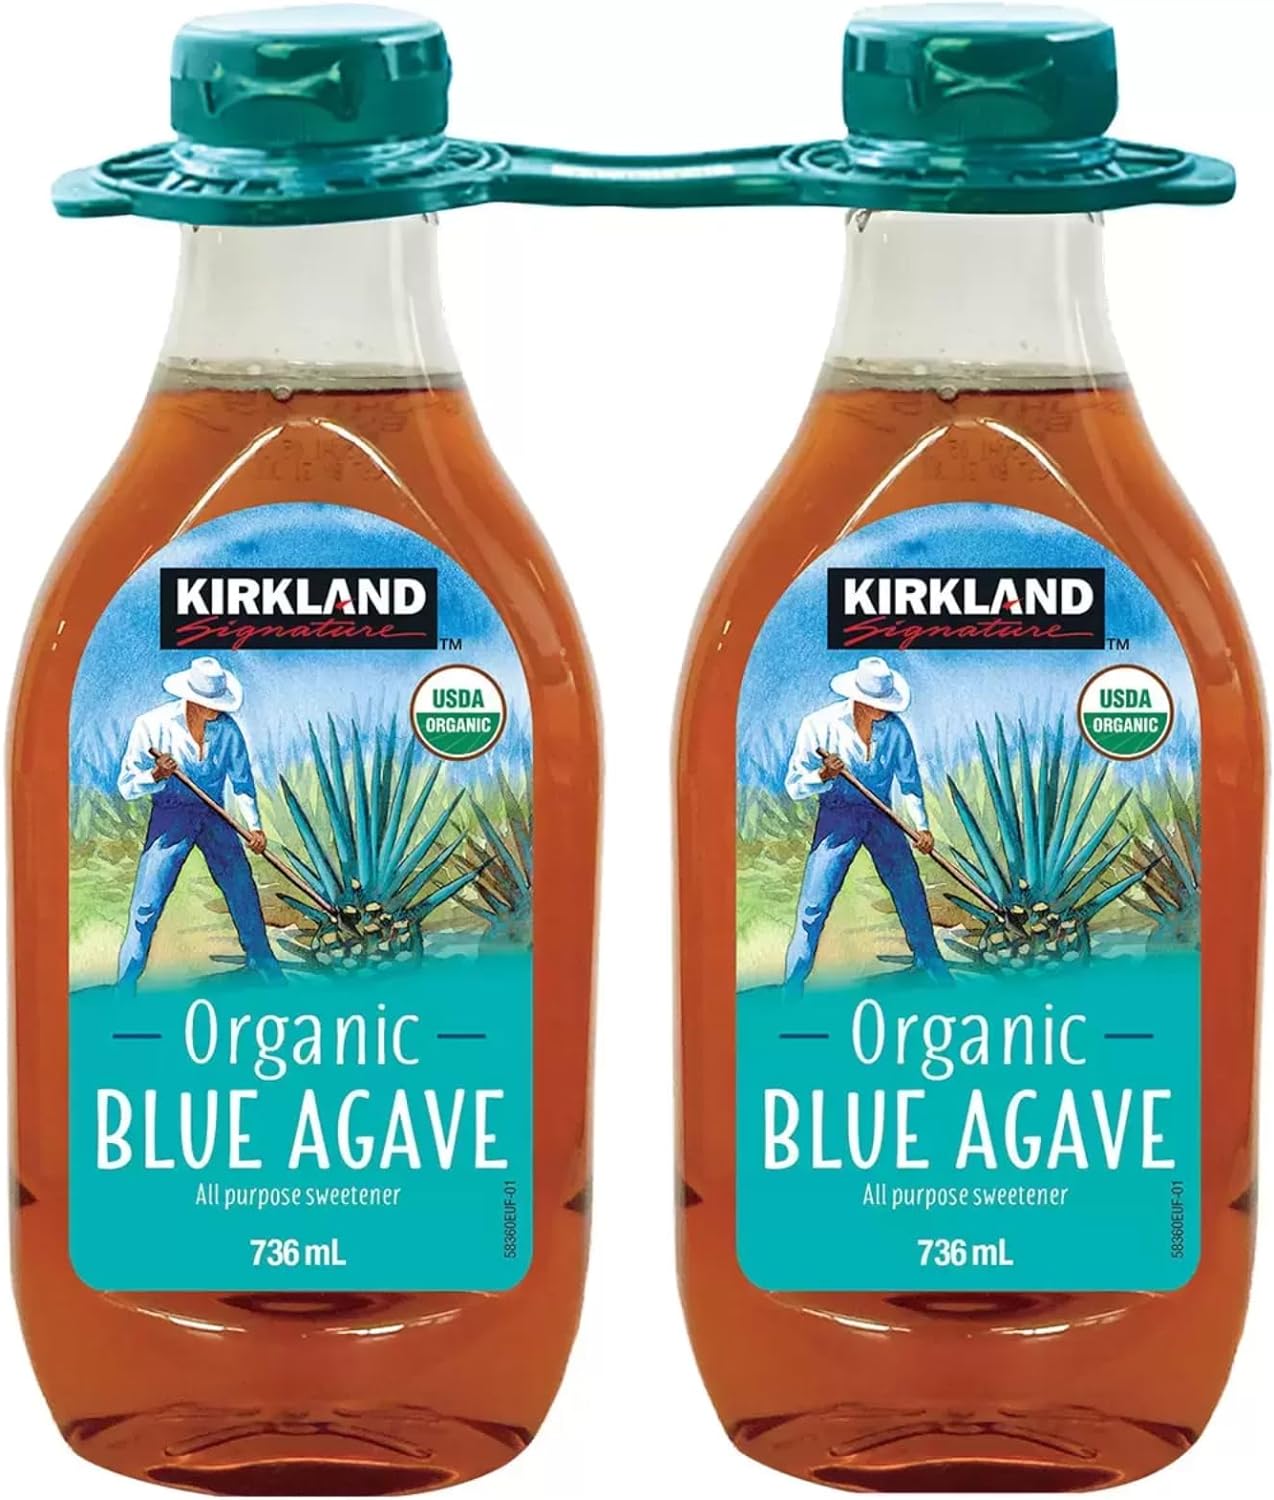 Kirkland Signature Organic Blue Agave Sweetener - 736ml (pack of 2)